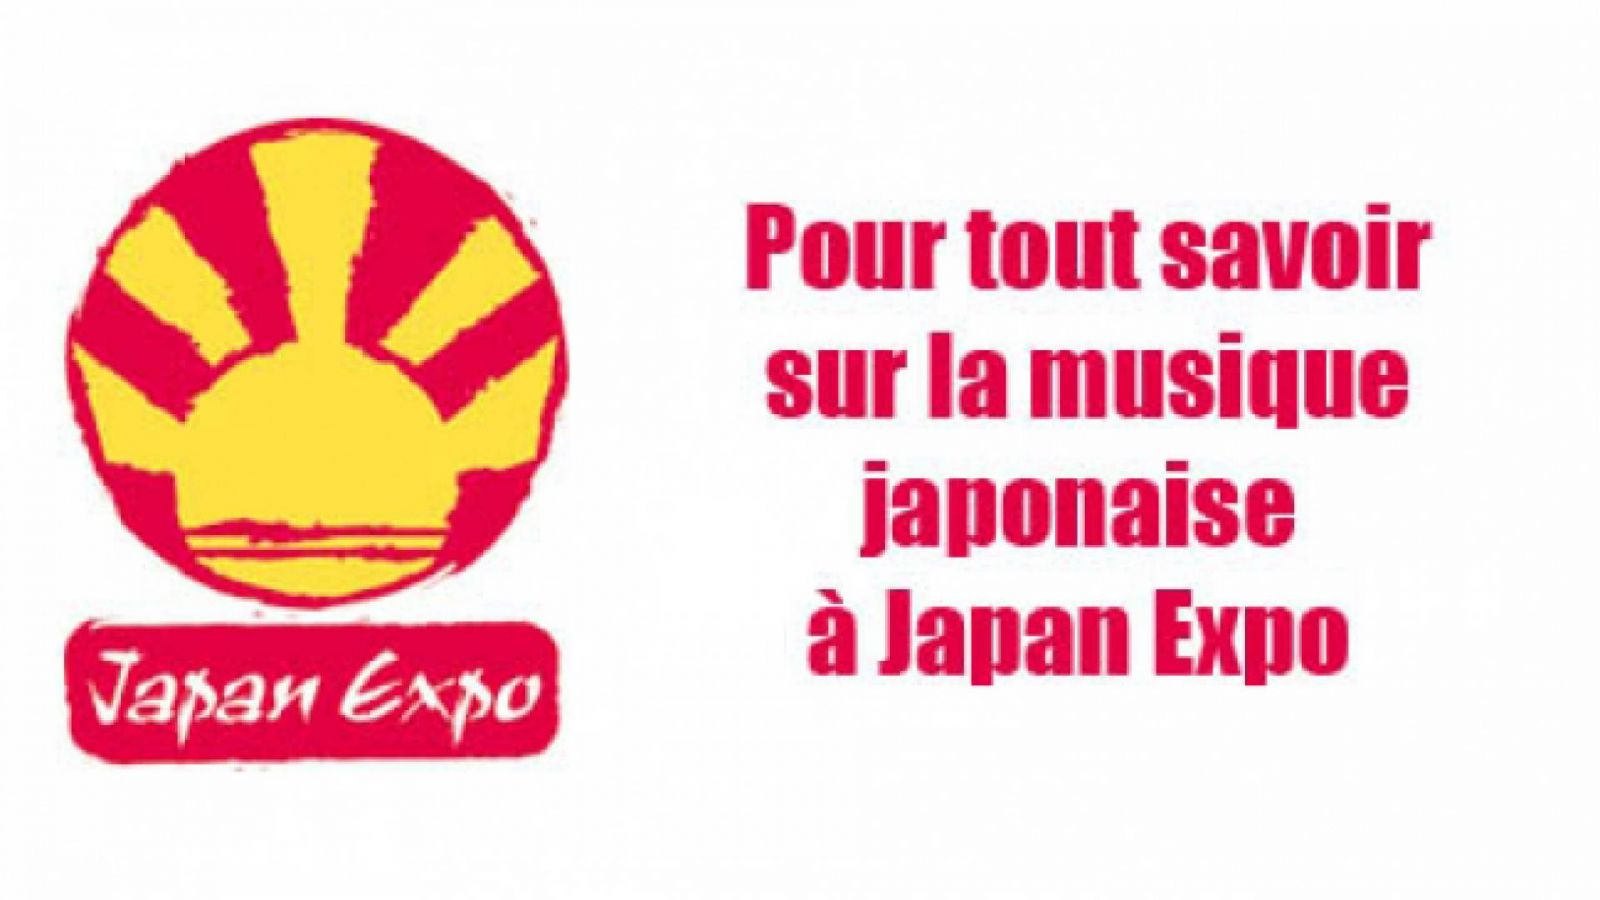 Japan Expo 2010: A List of Musicians © JAPAN EXPO